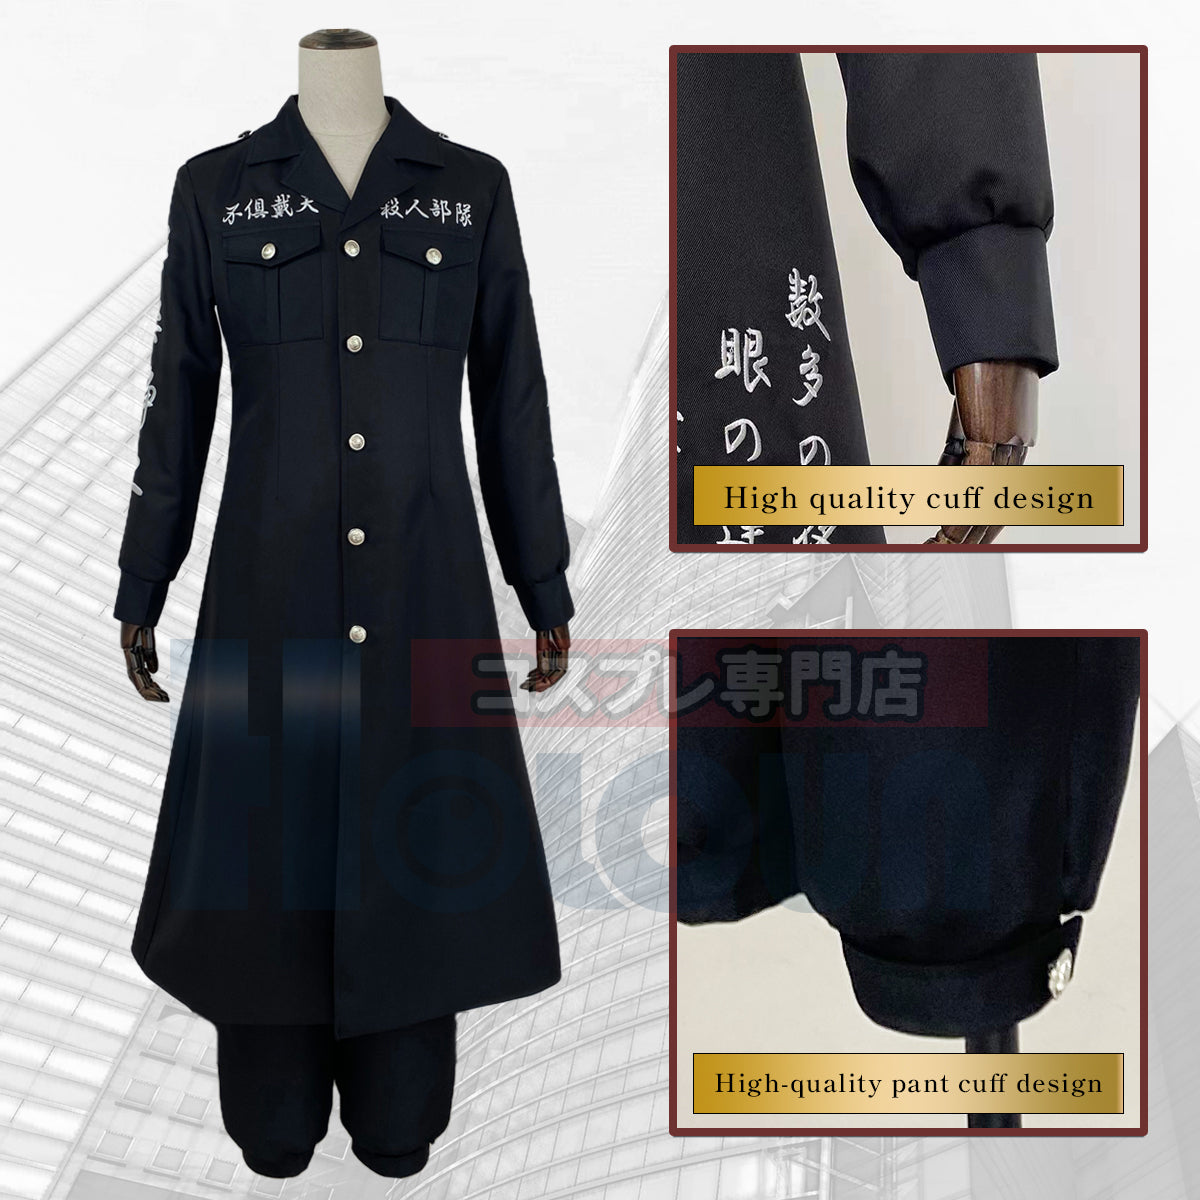 HOLOUN Tokyo Special Attack Black Dragon Shinichiro Sano Anime Cosplay Costumes Embroidered Style 2PCS Halloween